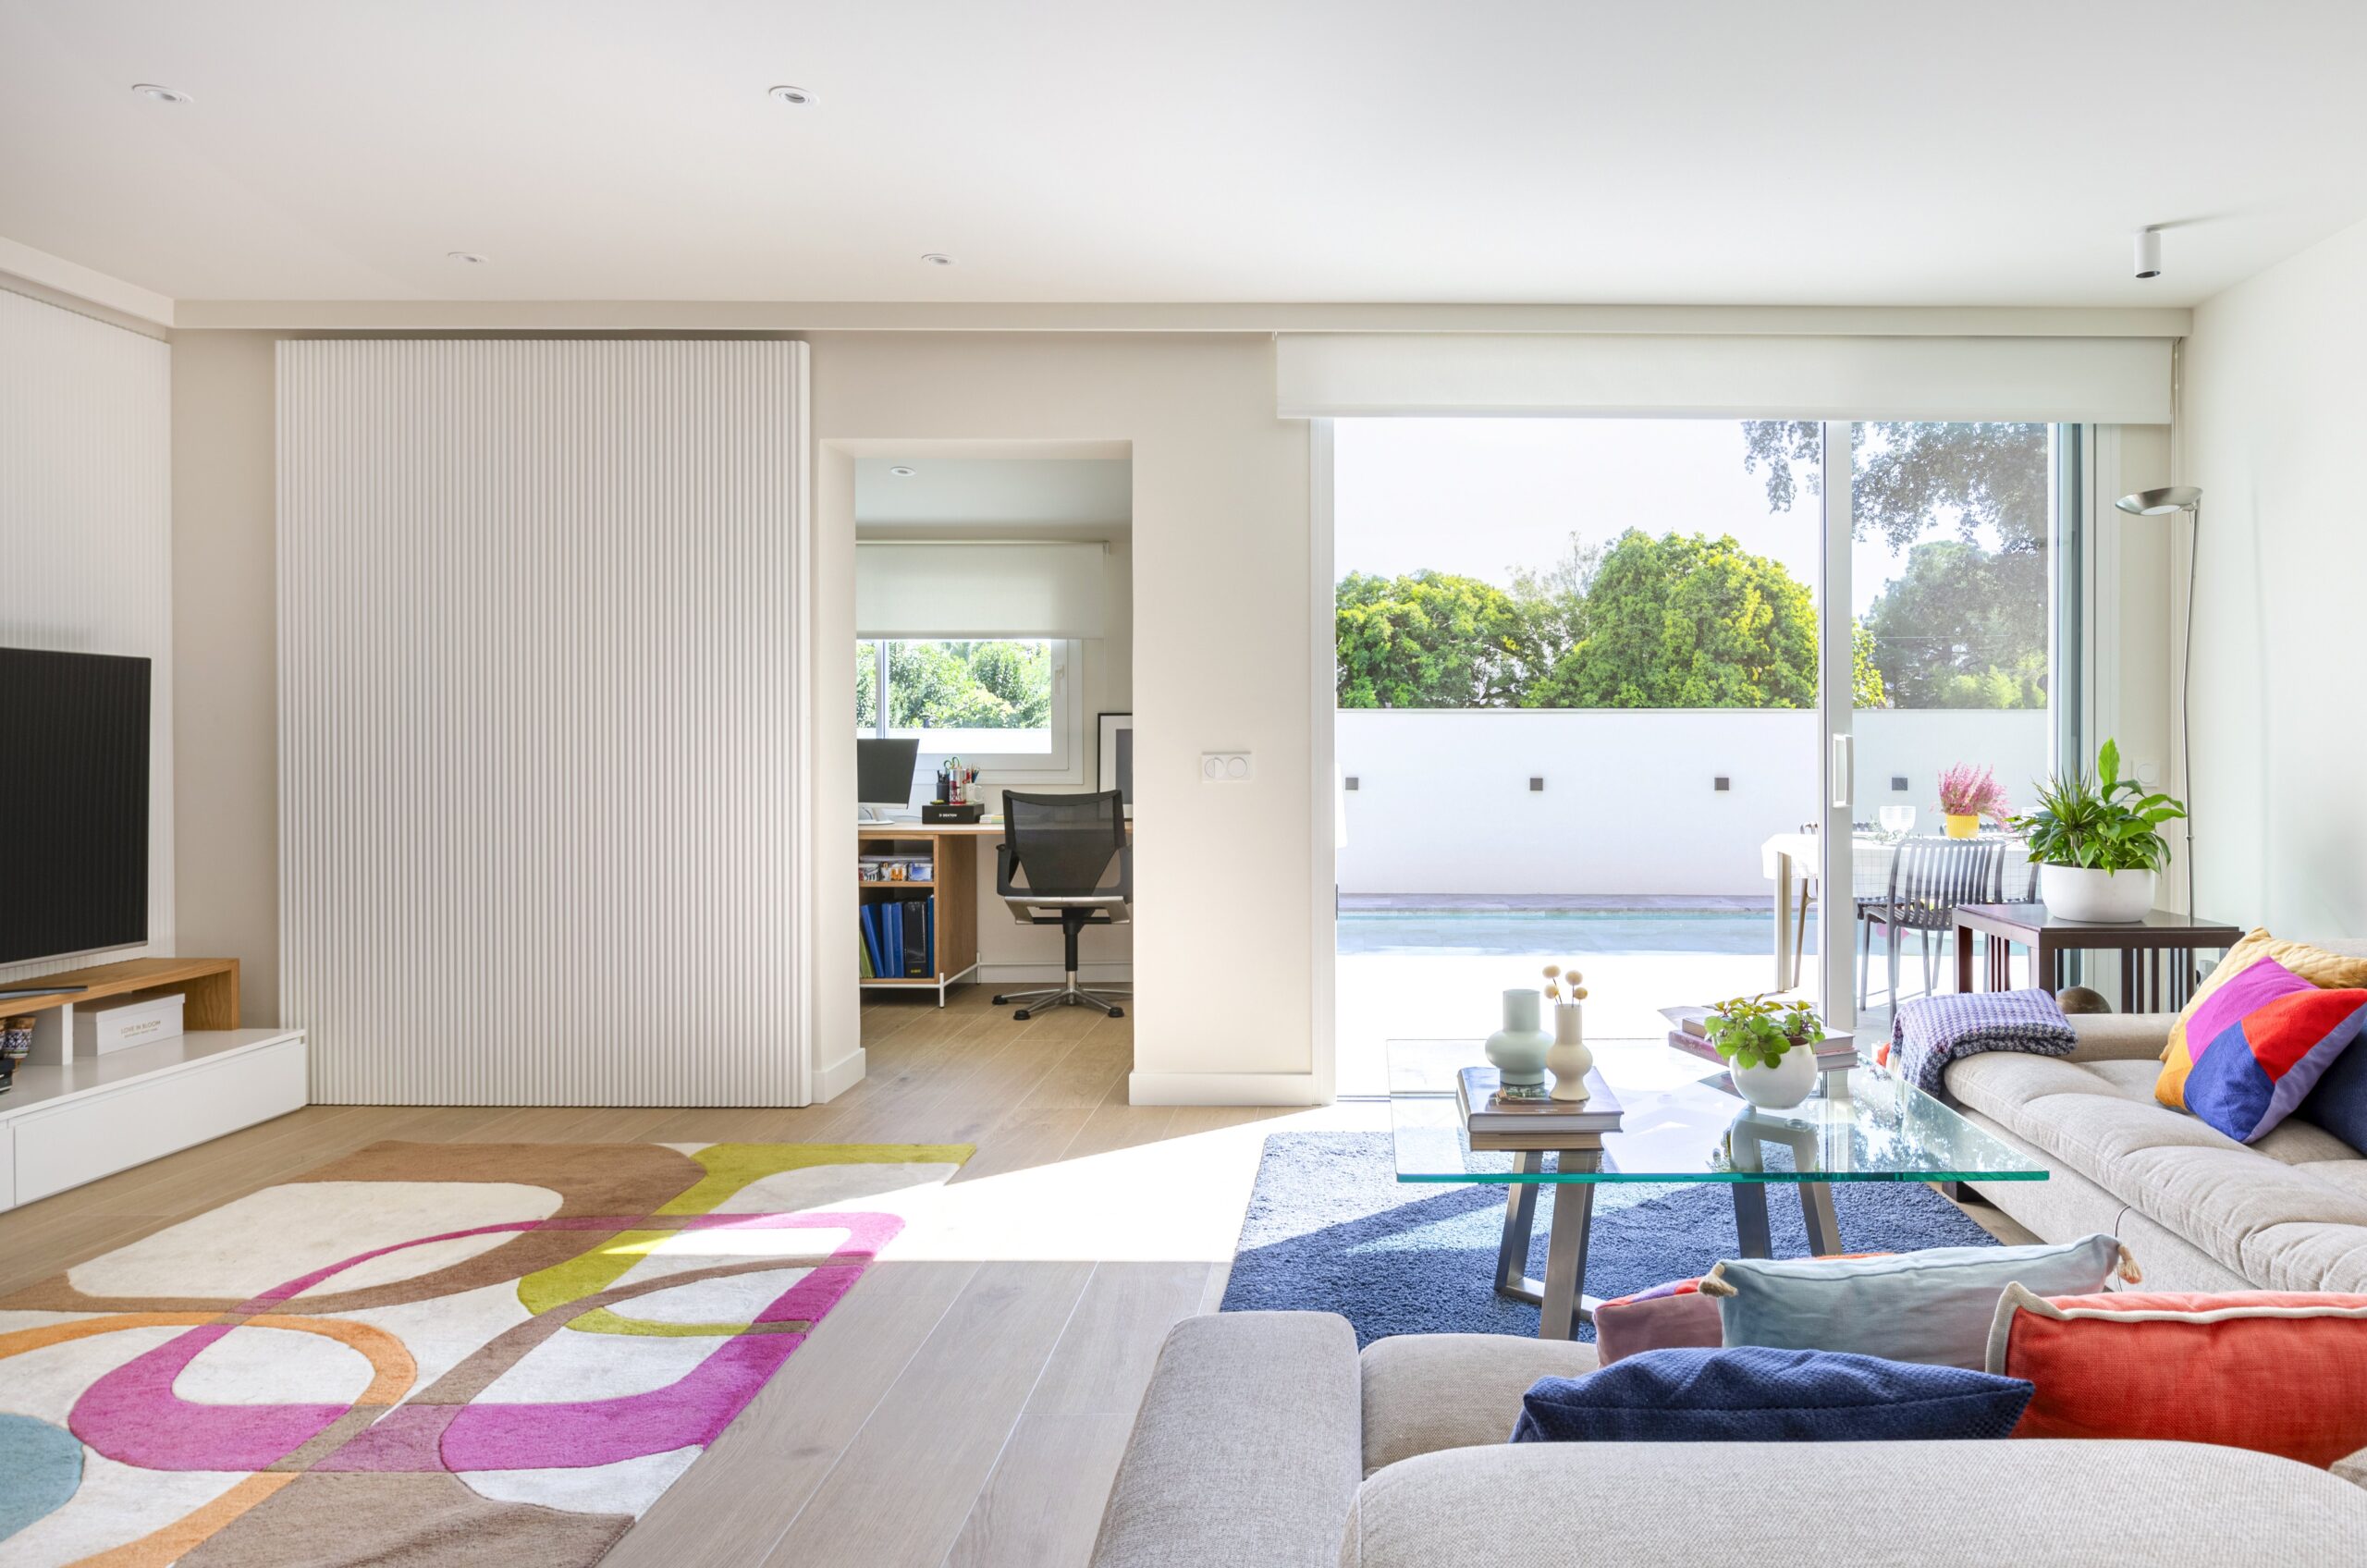 interiorismo de casa moderna minimalista